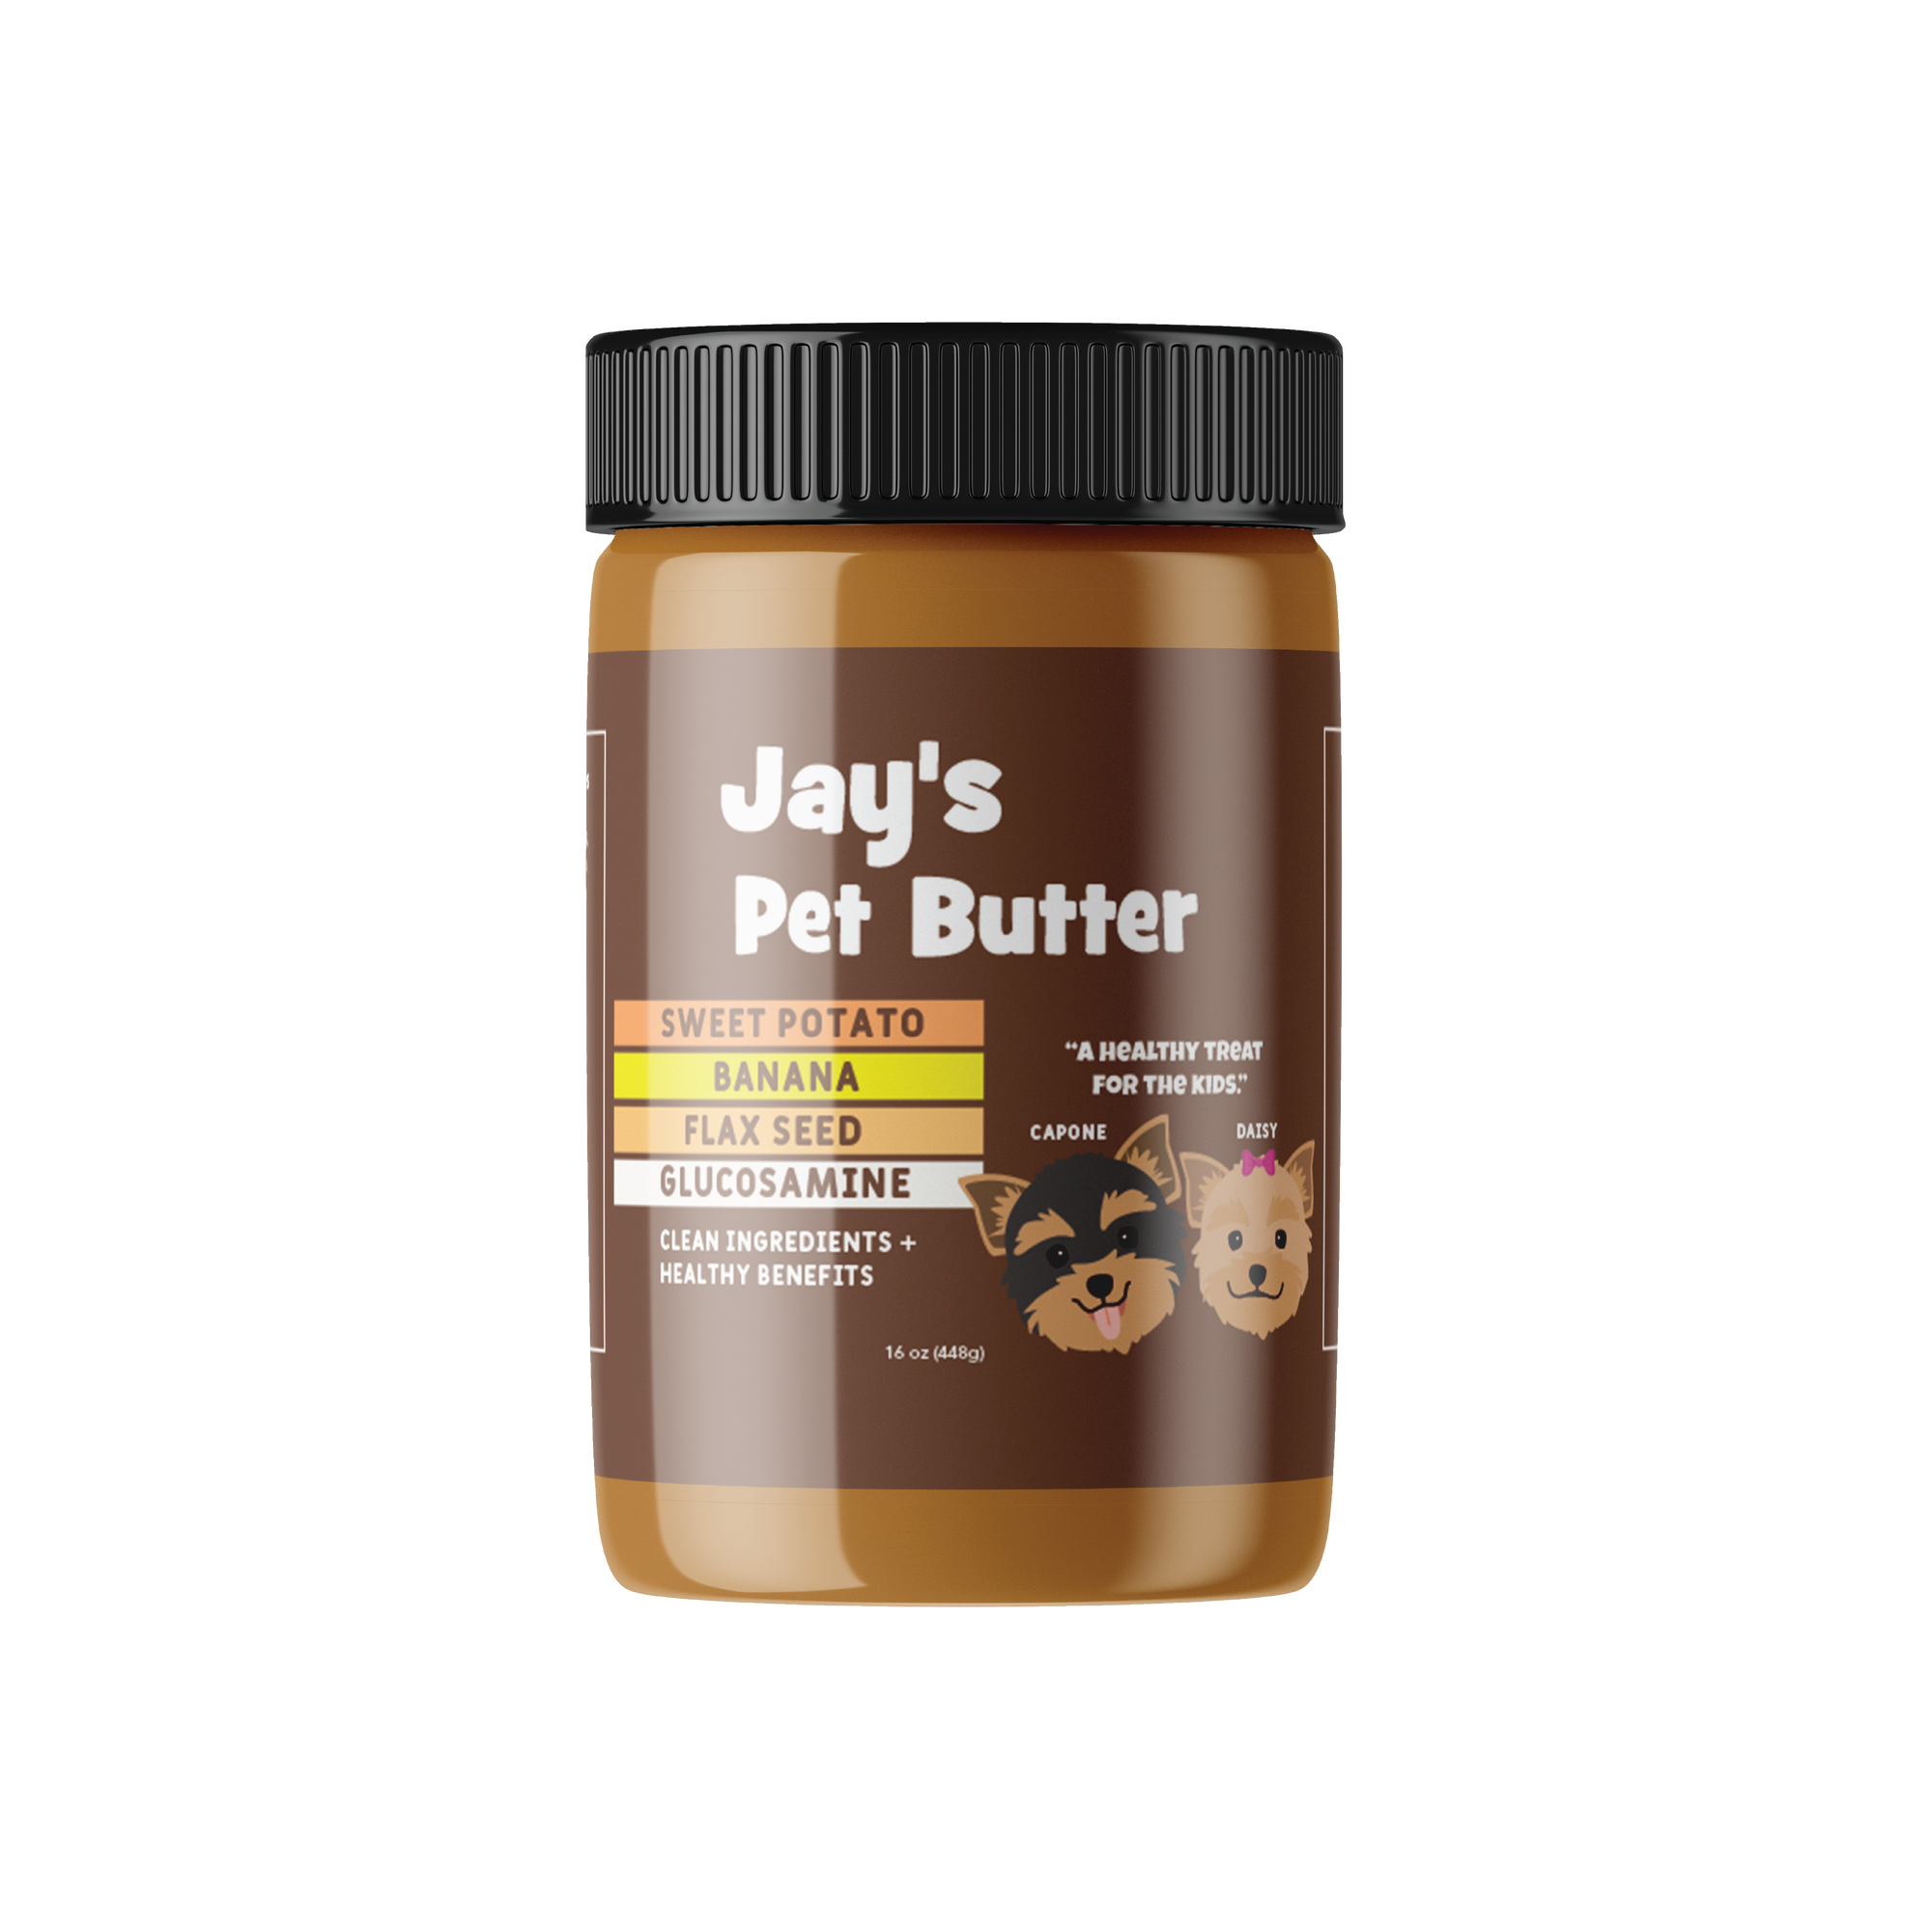 Jay's Pet Butter | Sweet Potato, Banana Chips, Flax Seeds & Glucosamine | 16 Ounce Jar